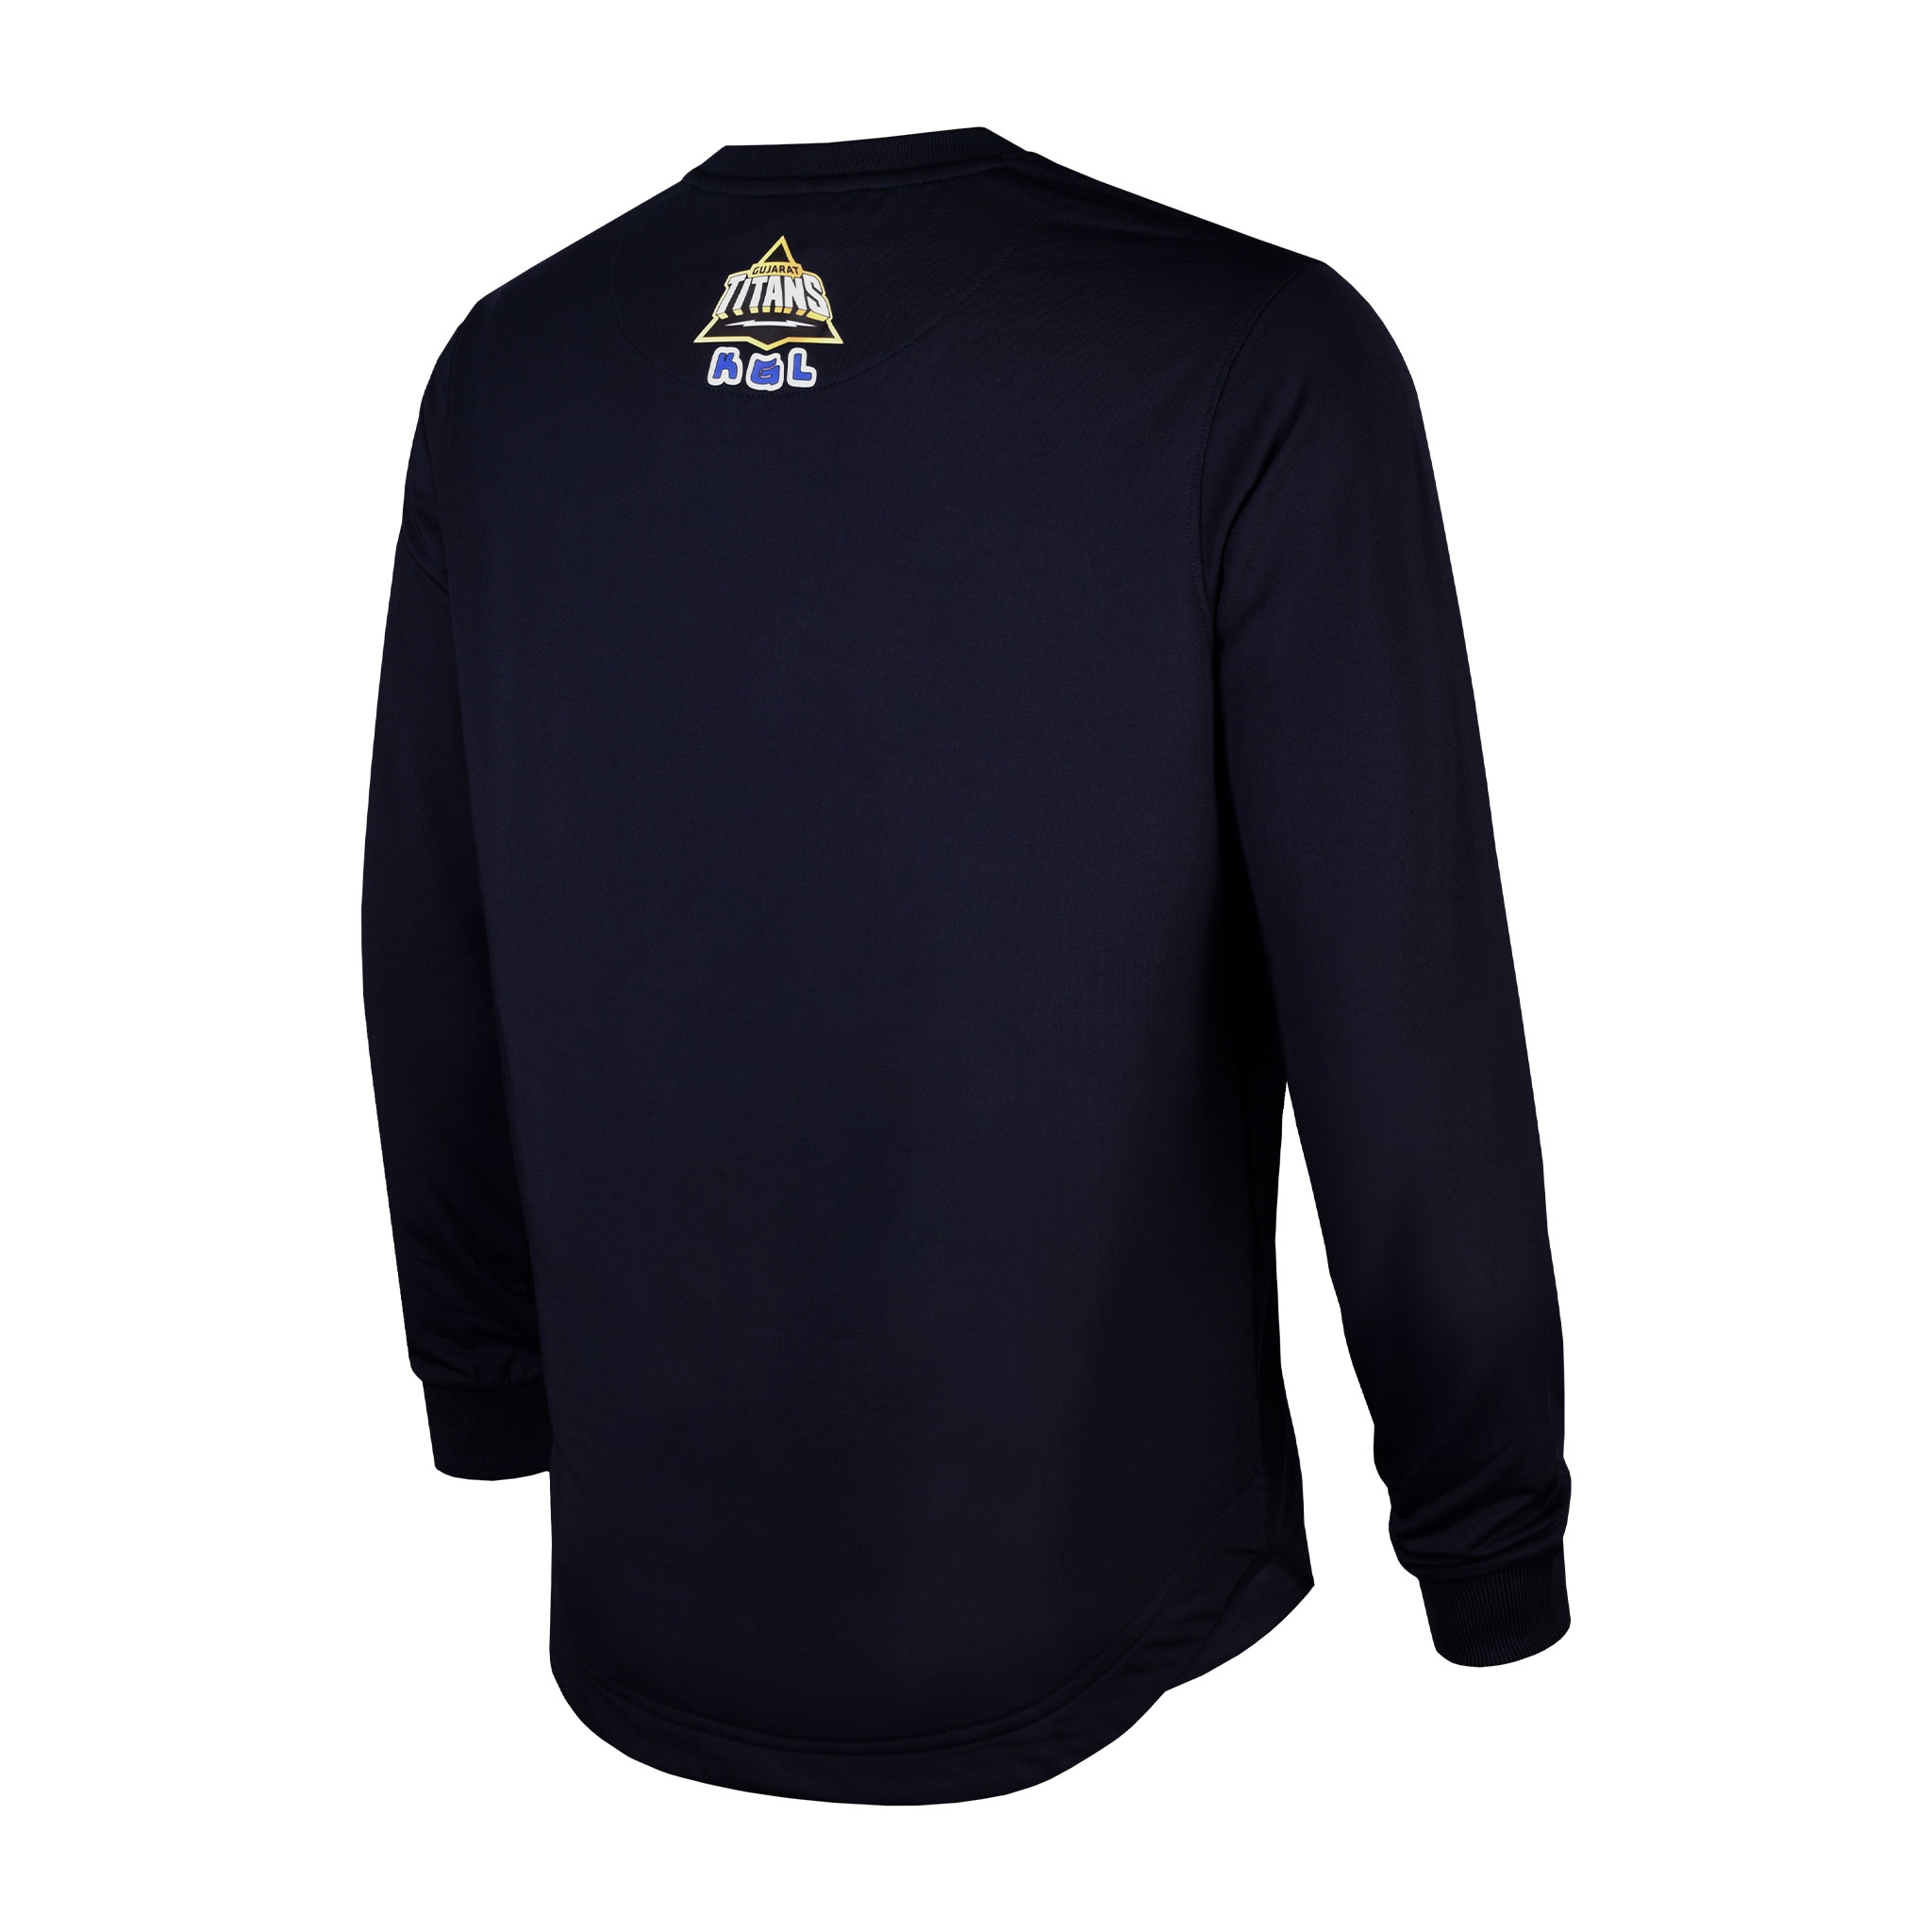 GTxKGL Fireball Navy Sweatshirt